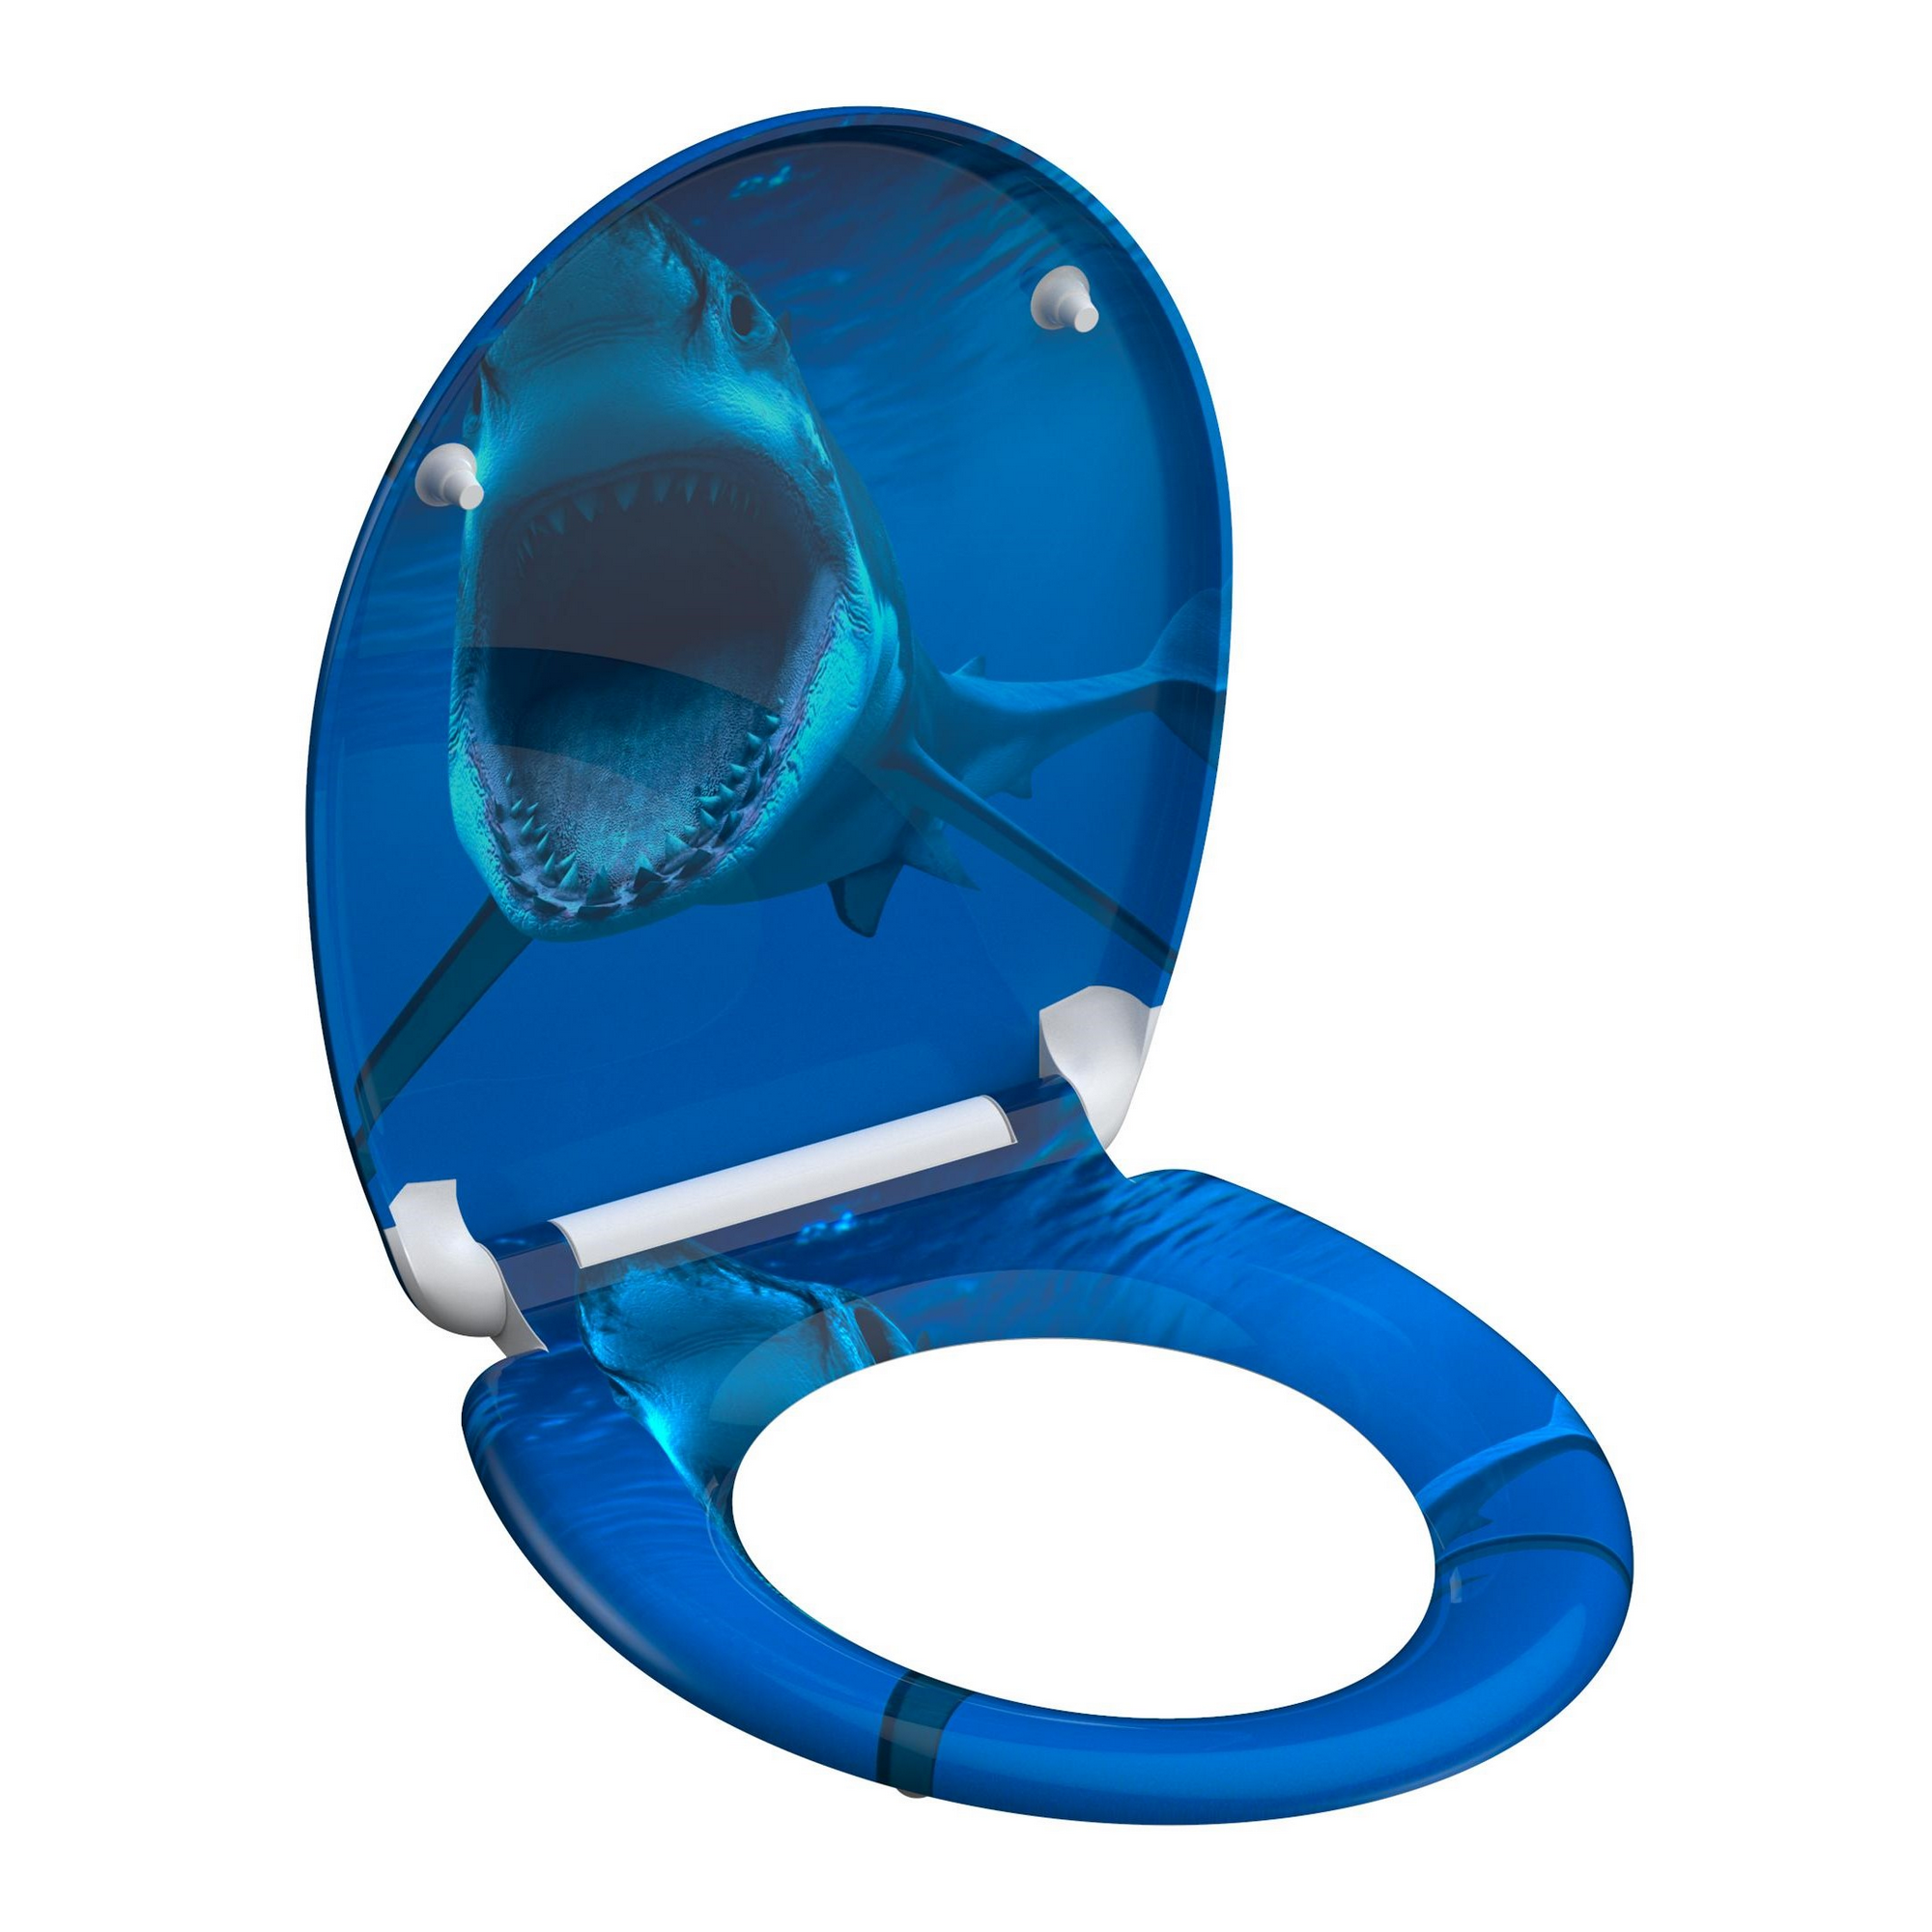 WC-Sitz 'Shark' mit Absenkautomatik blau 37,5 x 45 cm + product picture